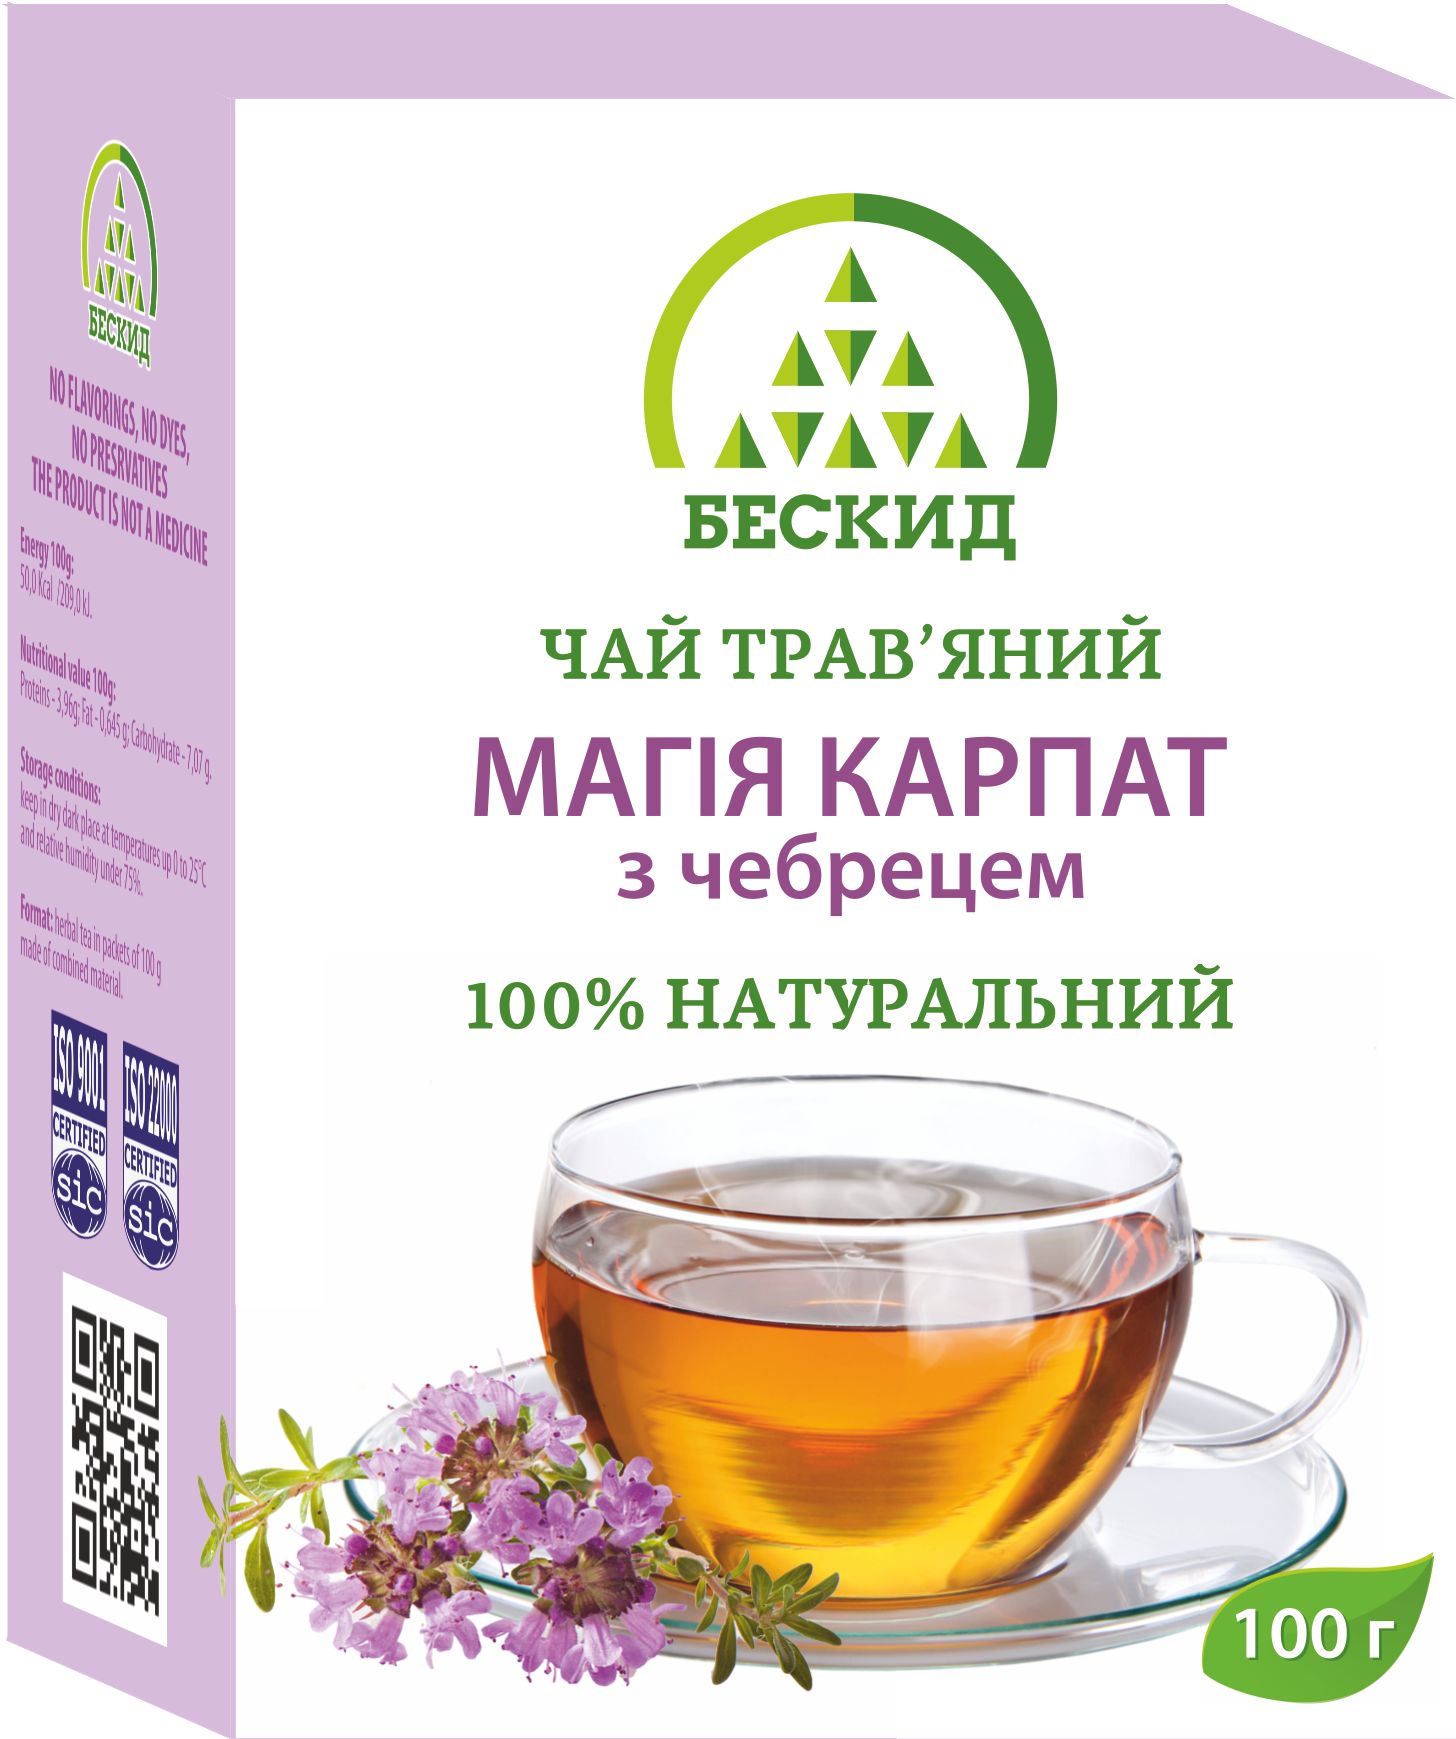 Beskyd Magic of the Carpathians Herbal Tea with Thyme 100g